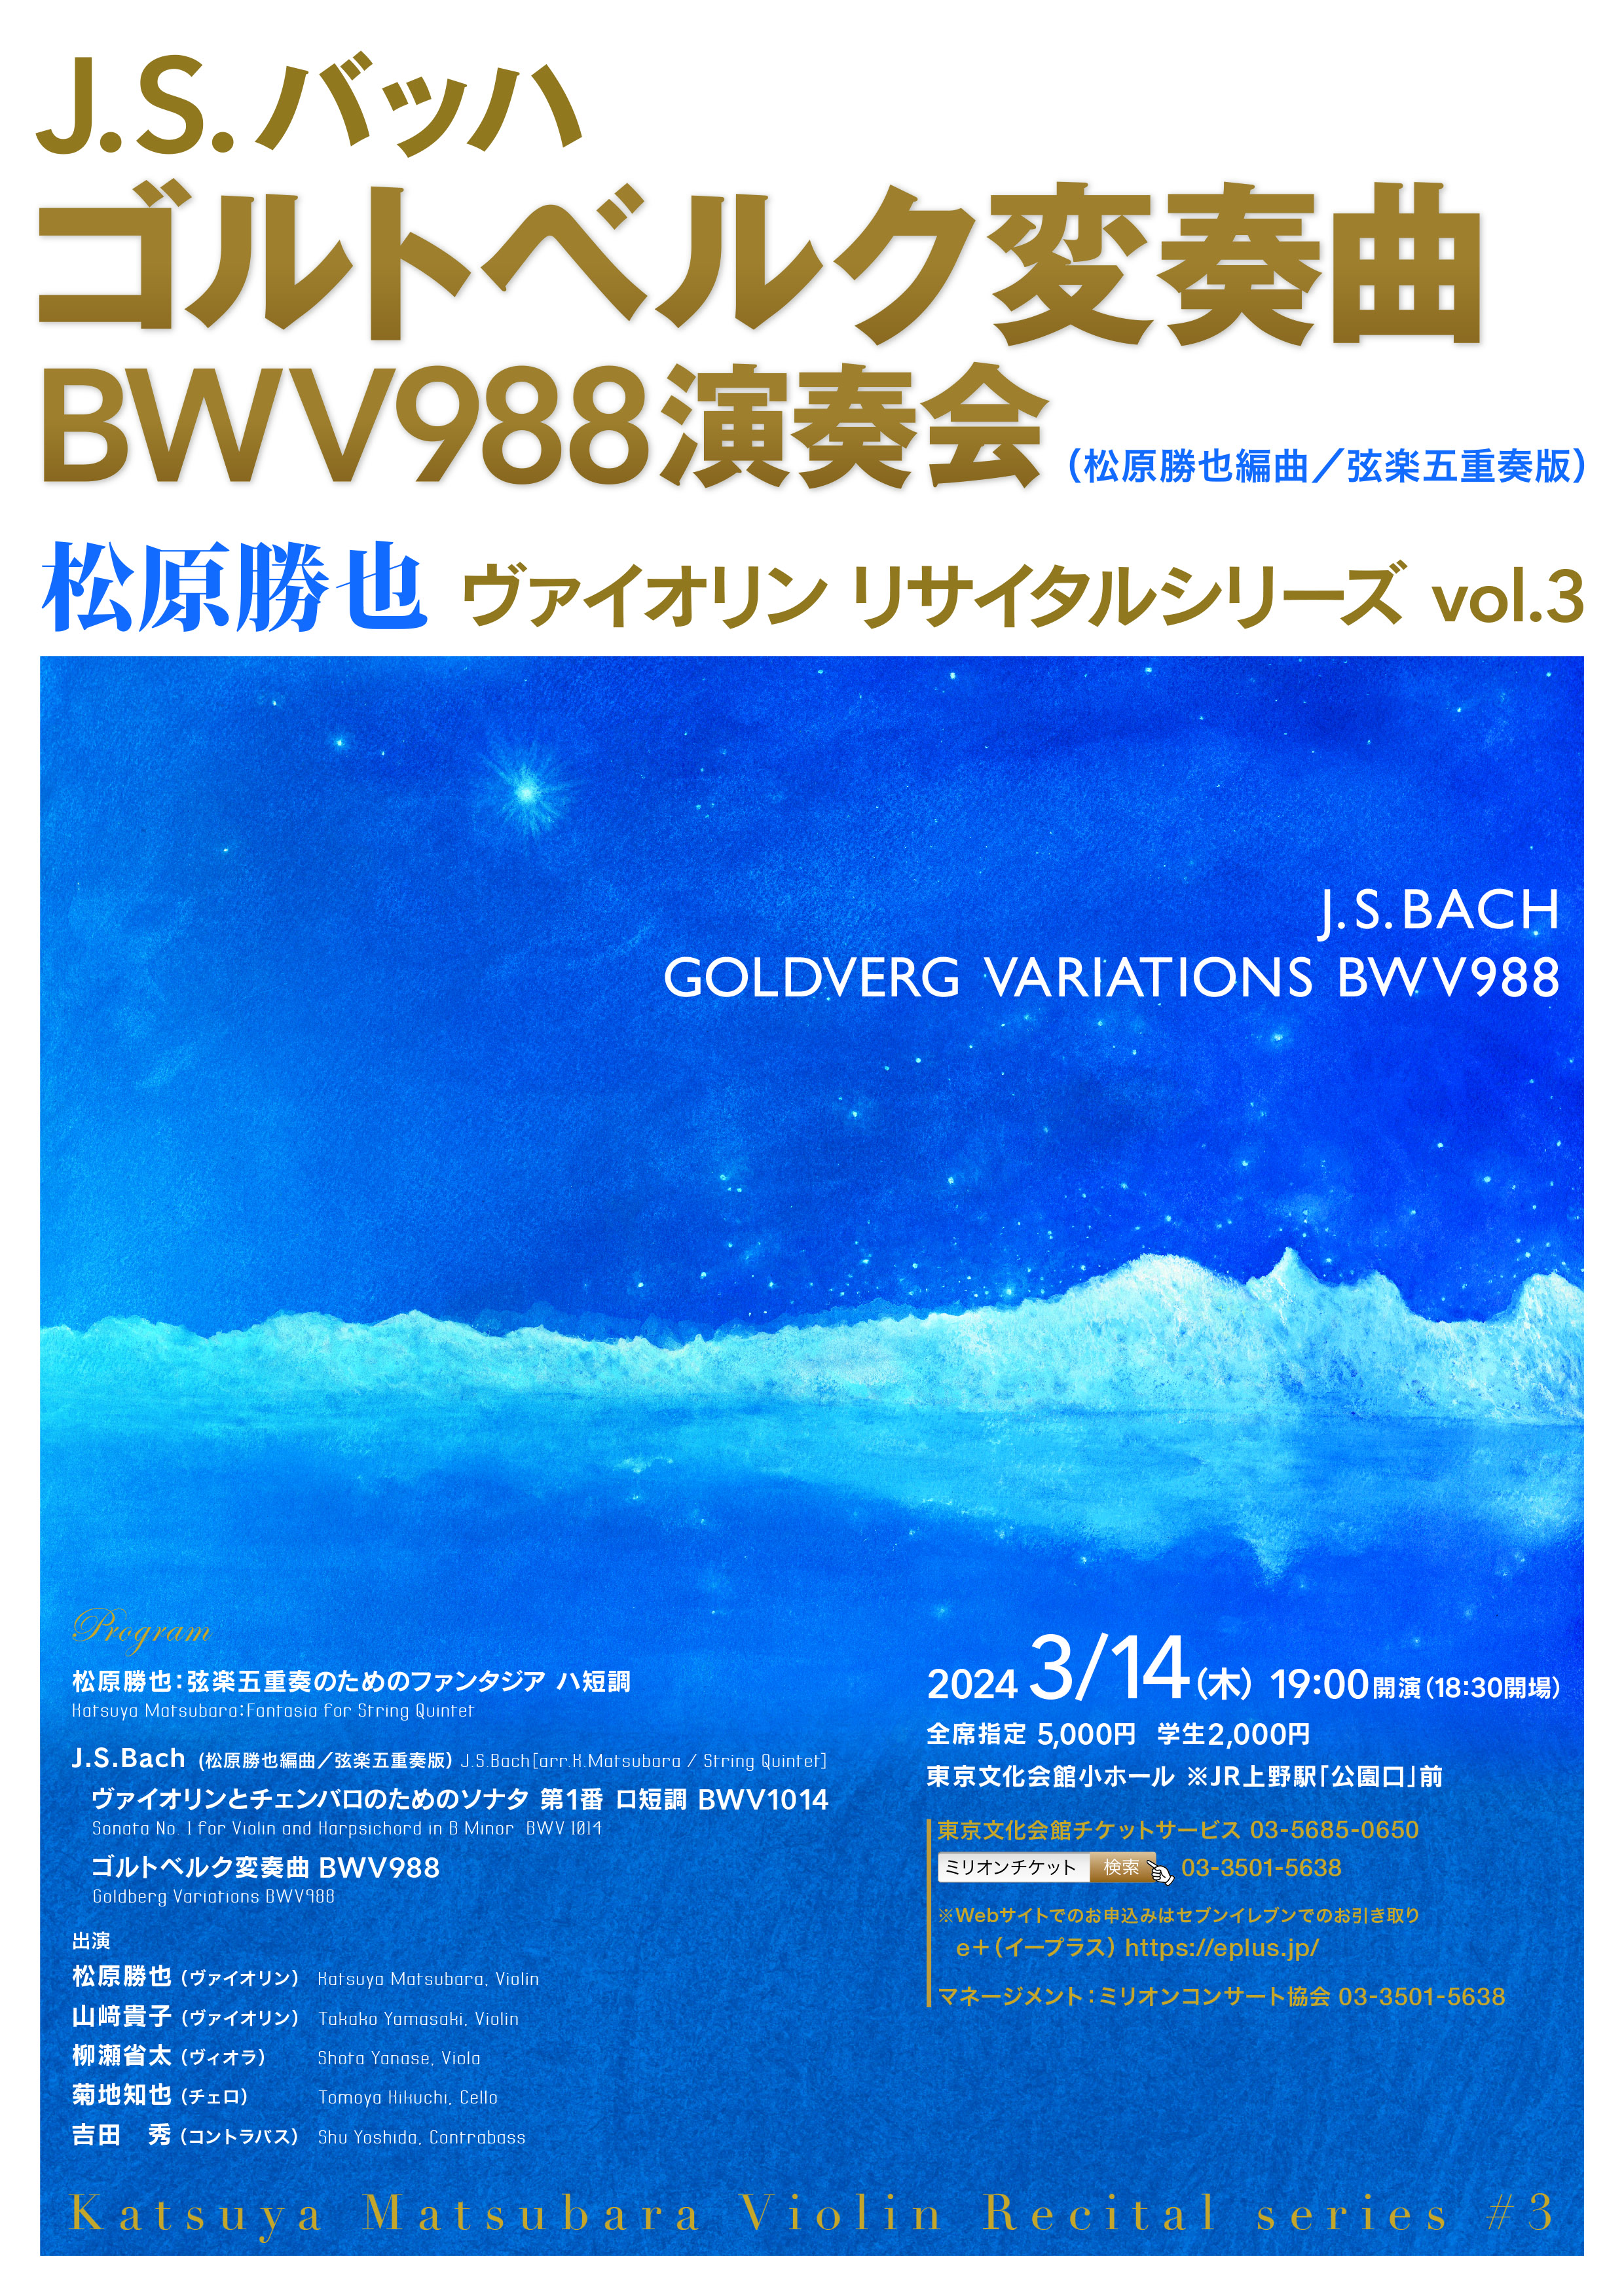 J.S.Bach Goltberg Variations BWV988 Concert